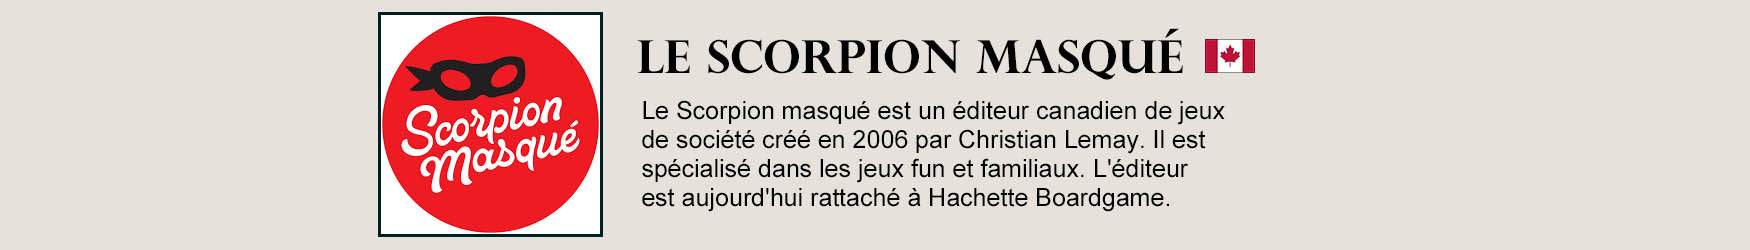 Le scorpion masqué tag